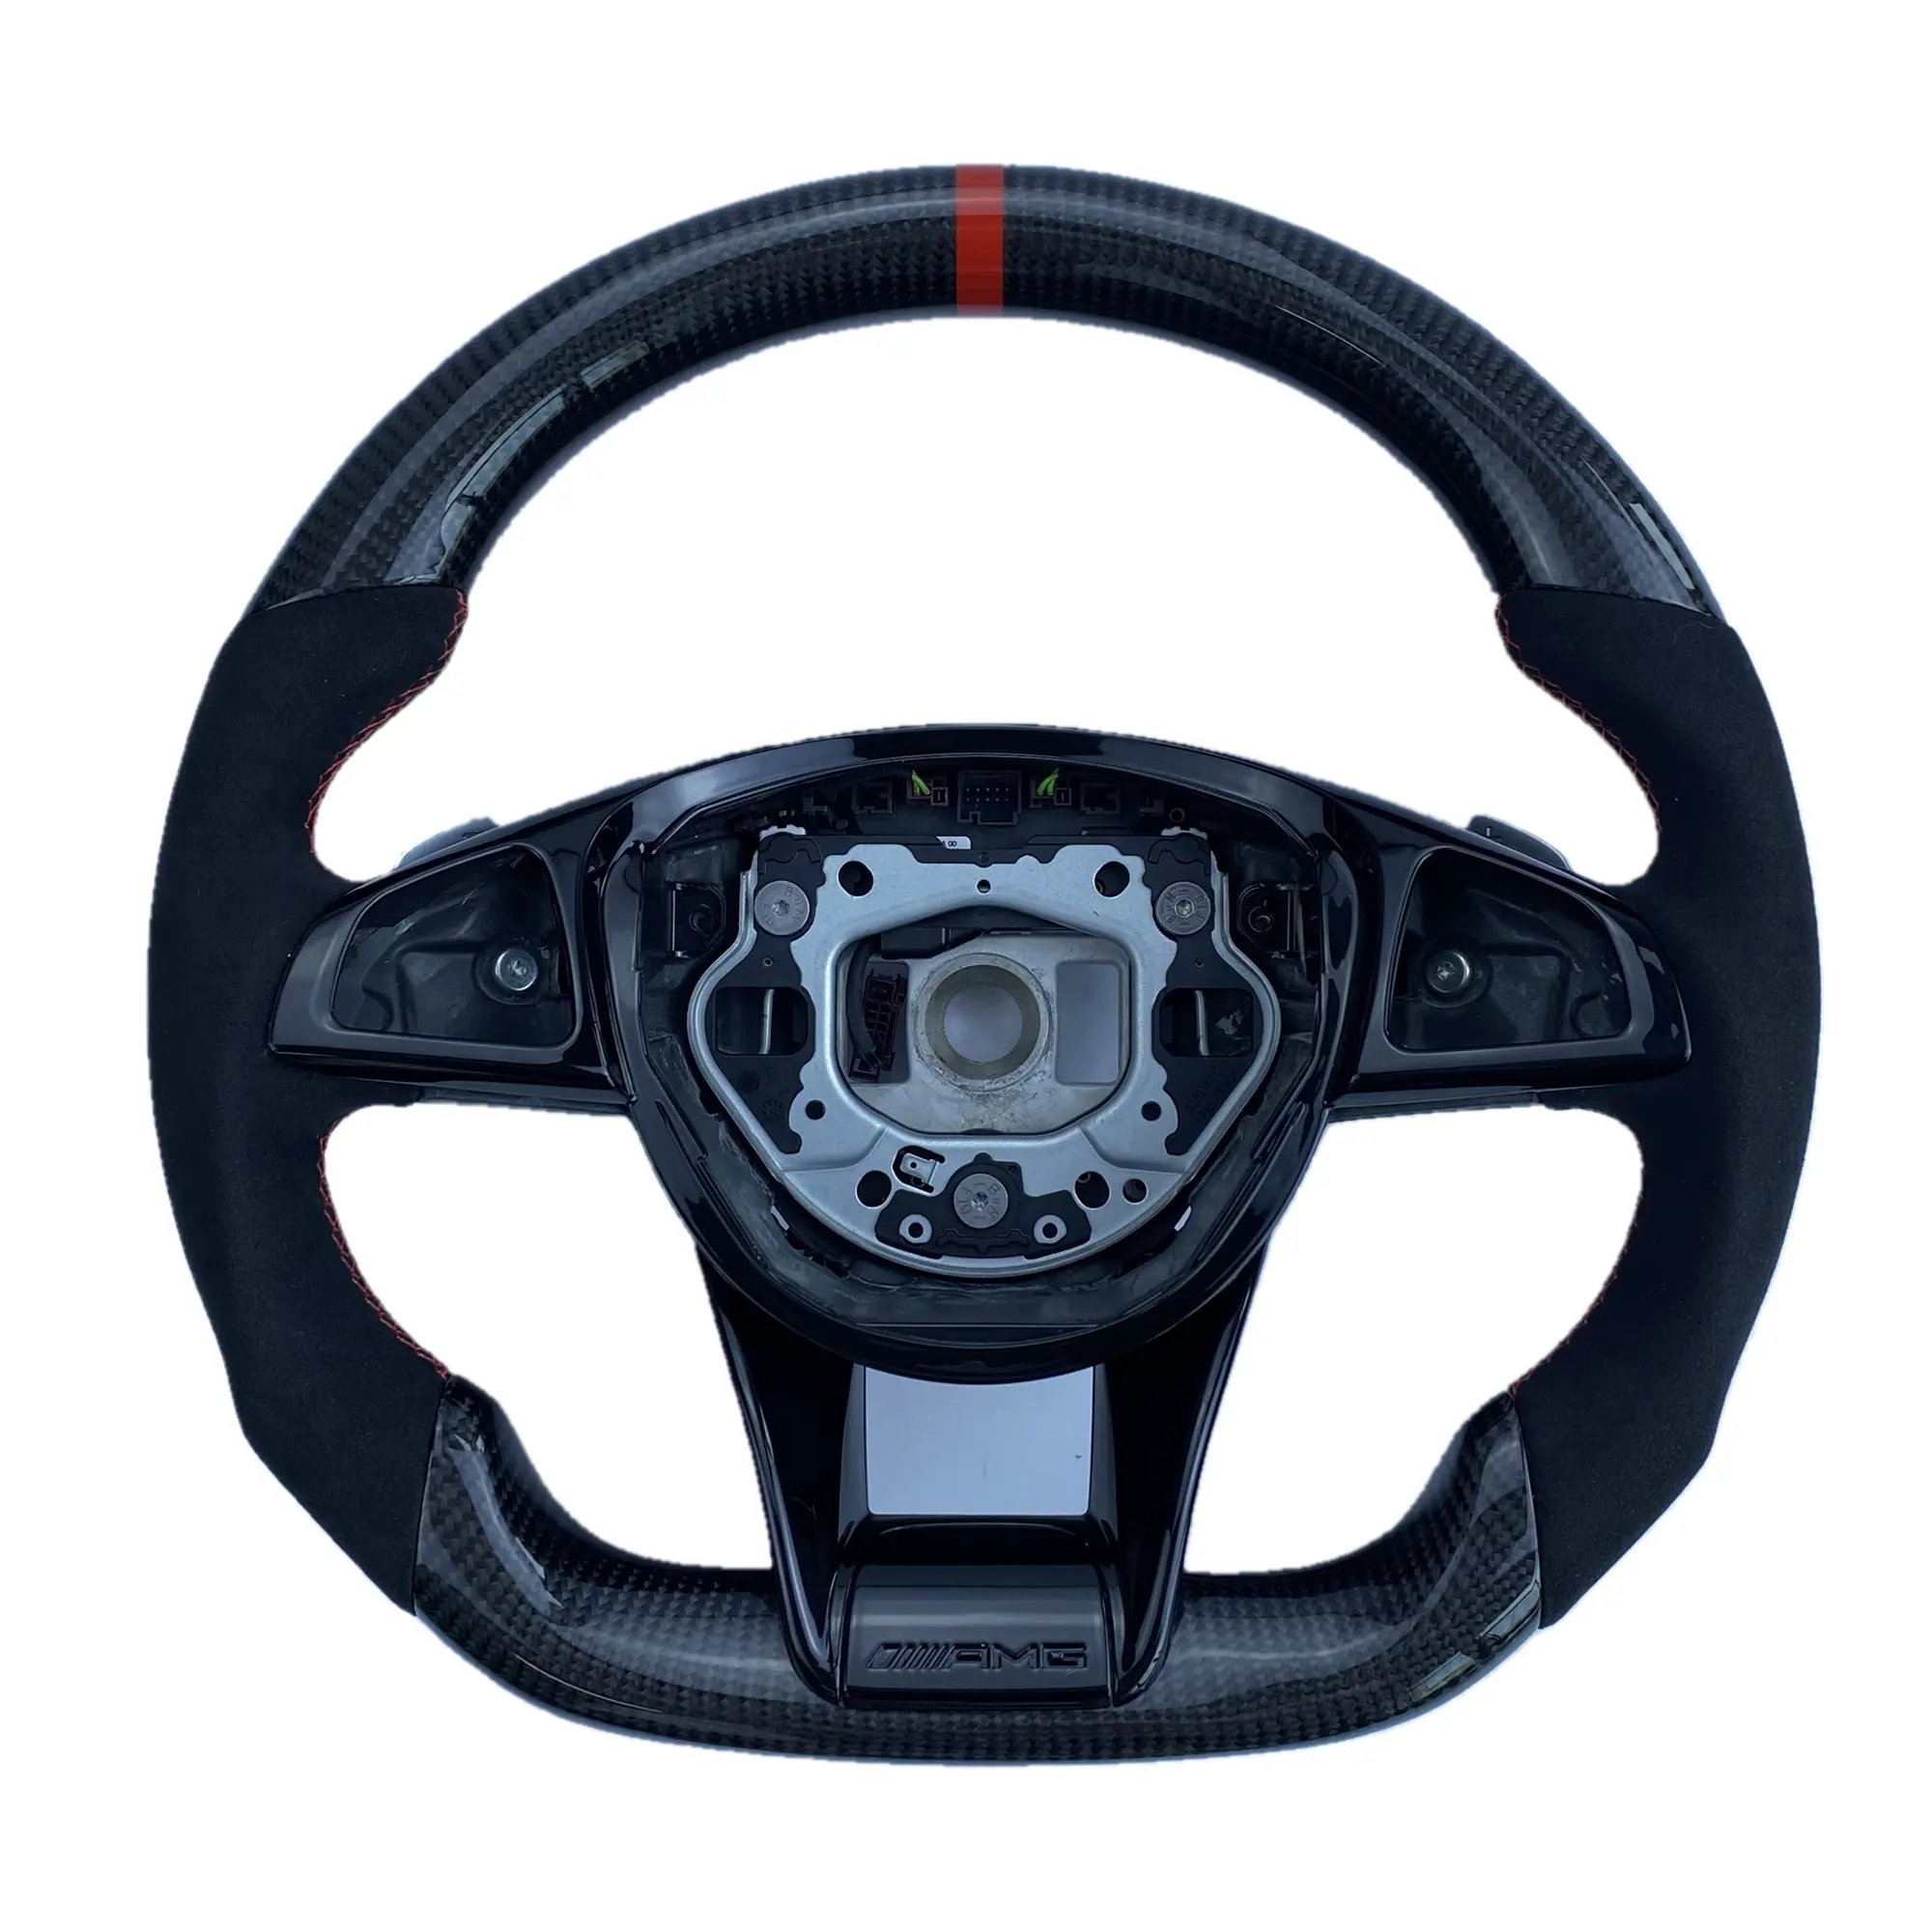 Ever-Carbon Racing ECR Custom Design Carbon Fiber Steering Wheel For Mercedes Benz AMG W205 Steering Wheel Trim